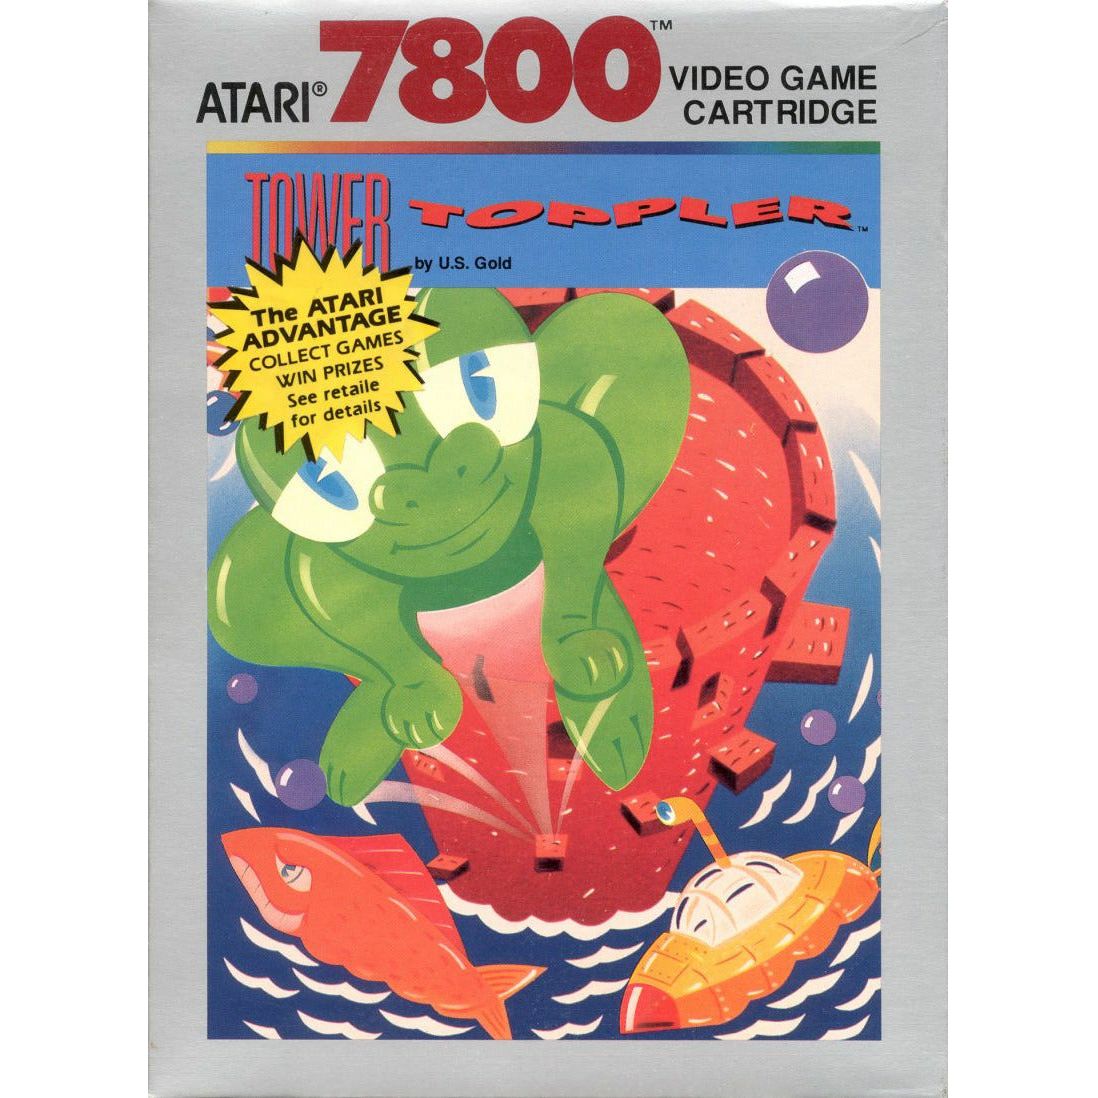 Atari 7800 - Tower Toppler (Complete in Box)